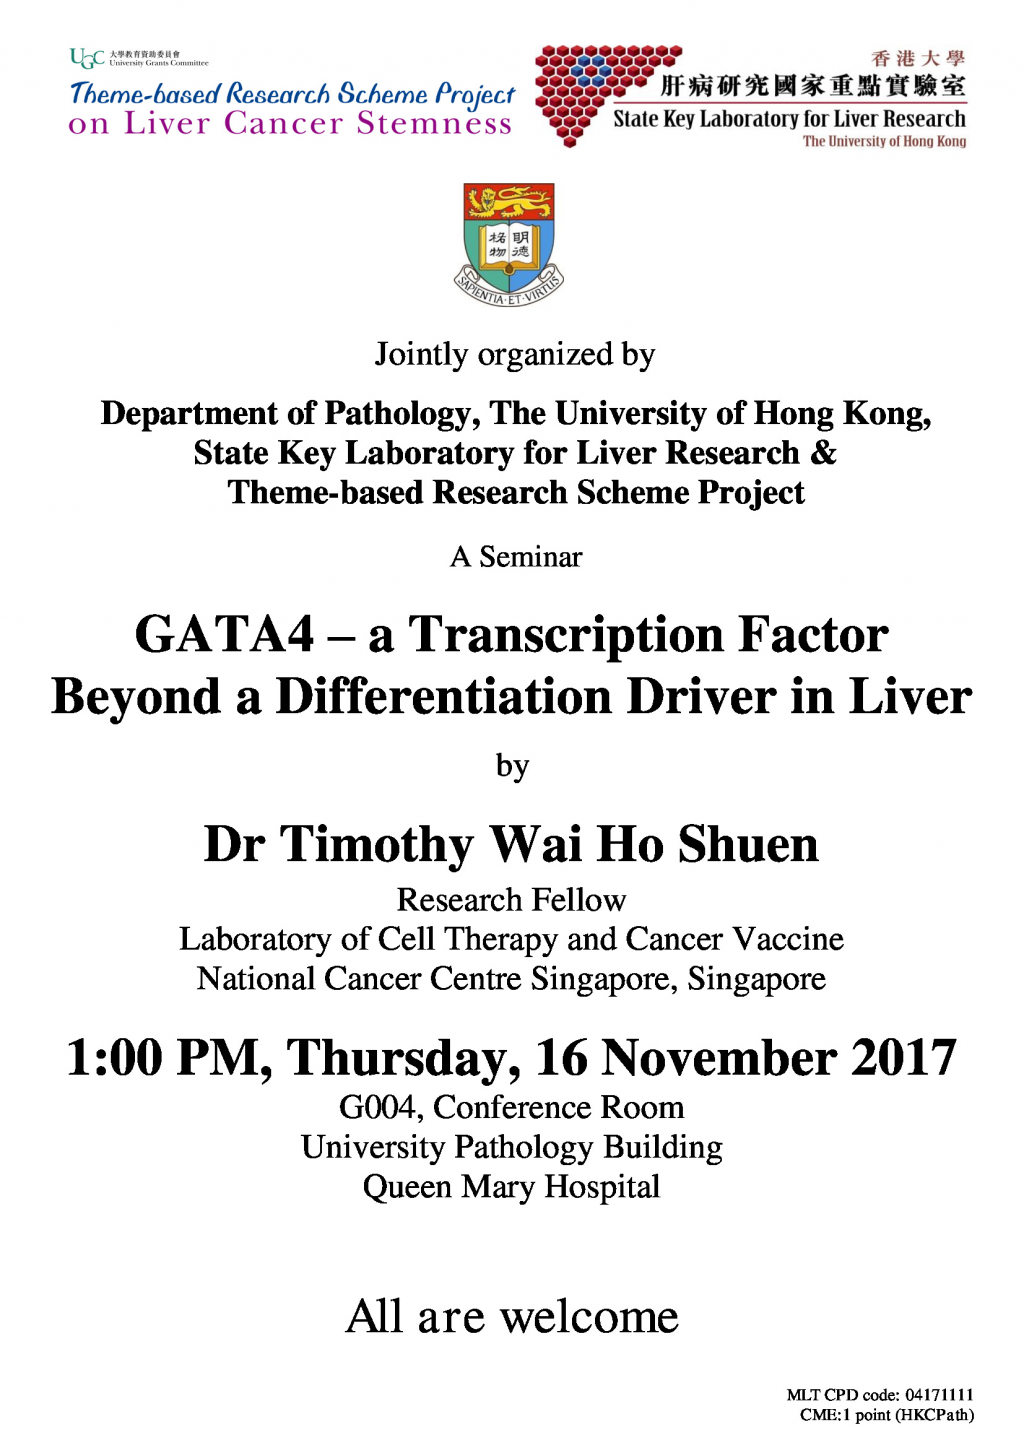 A Seminar GATA4 - a Transcription Factor Beyond a Differentiation Driver in Liver